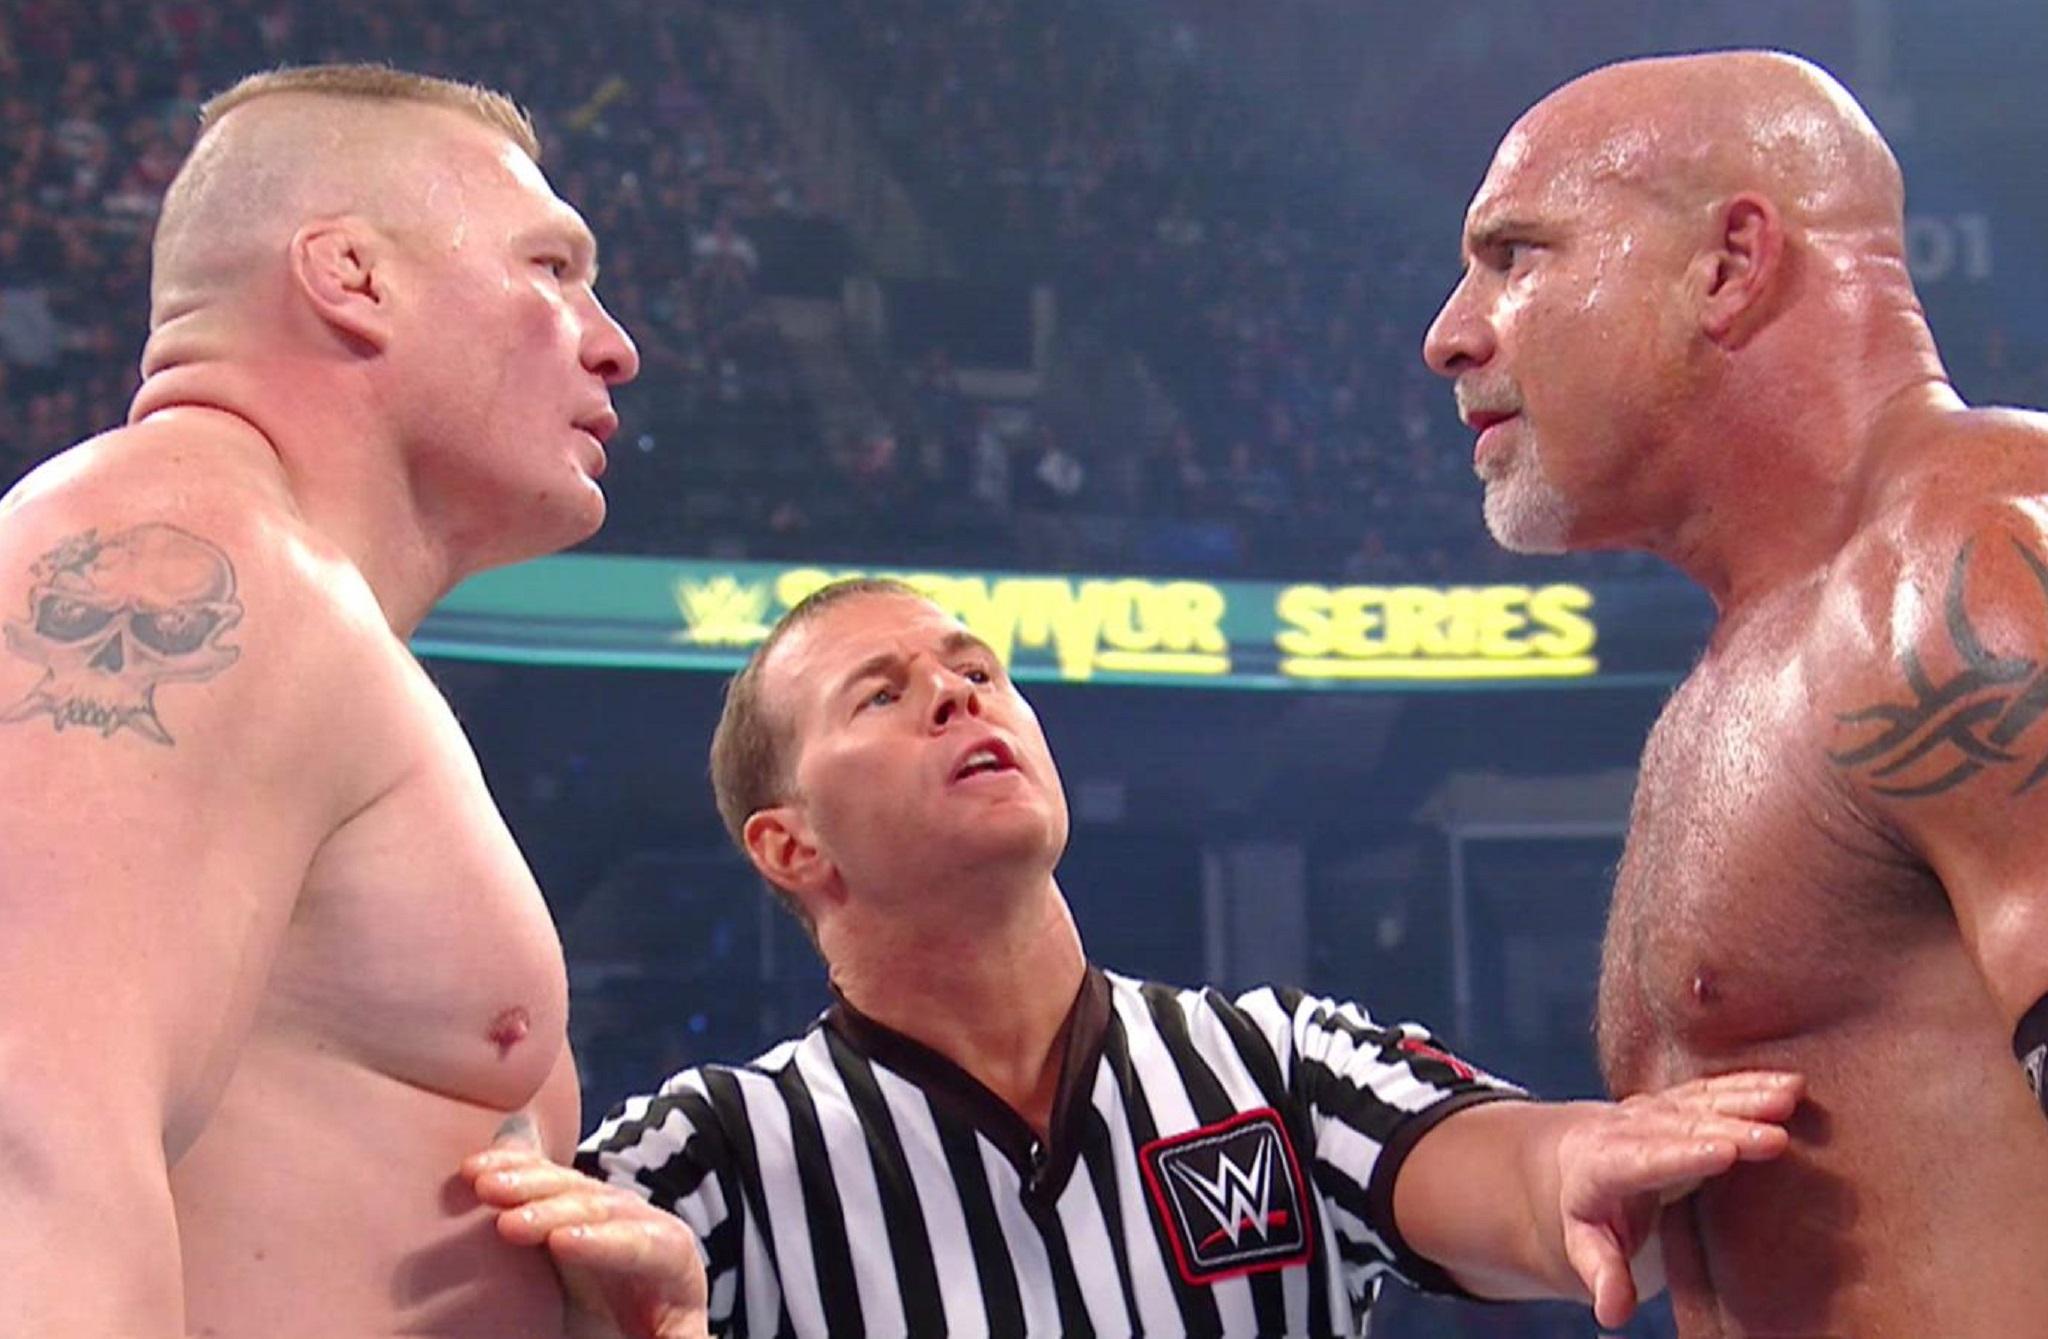 Goldberg beat Brock Lesnar easily in their Survivor Series match